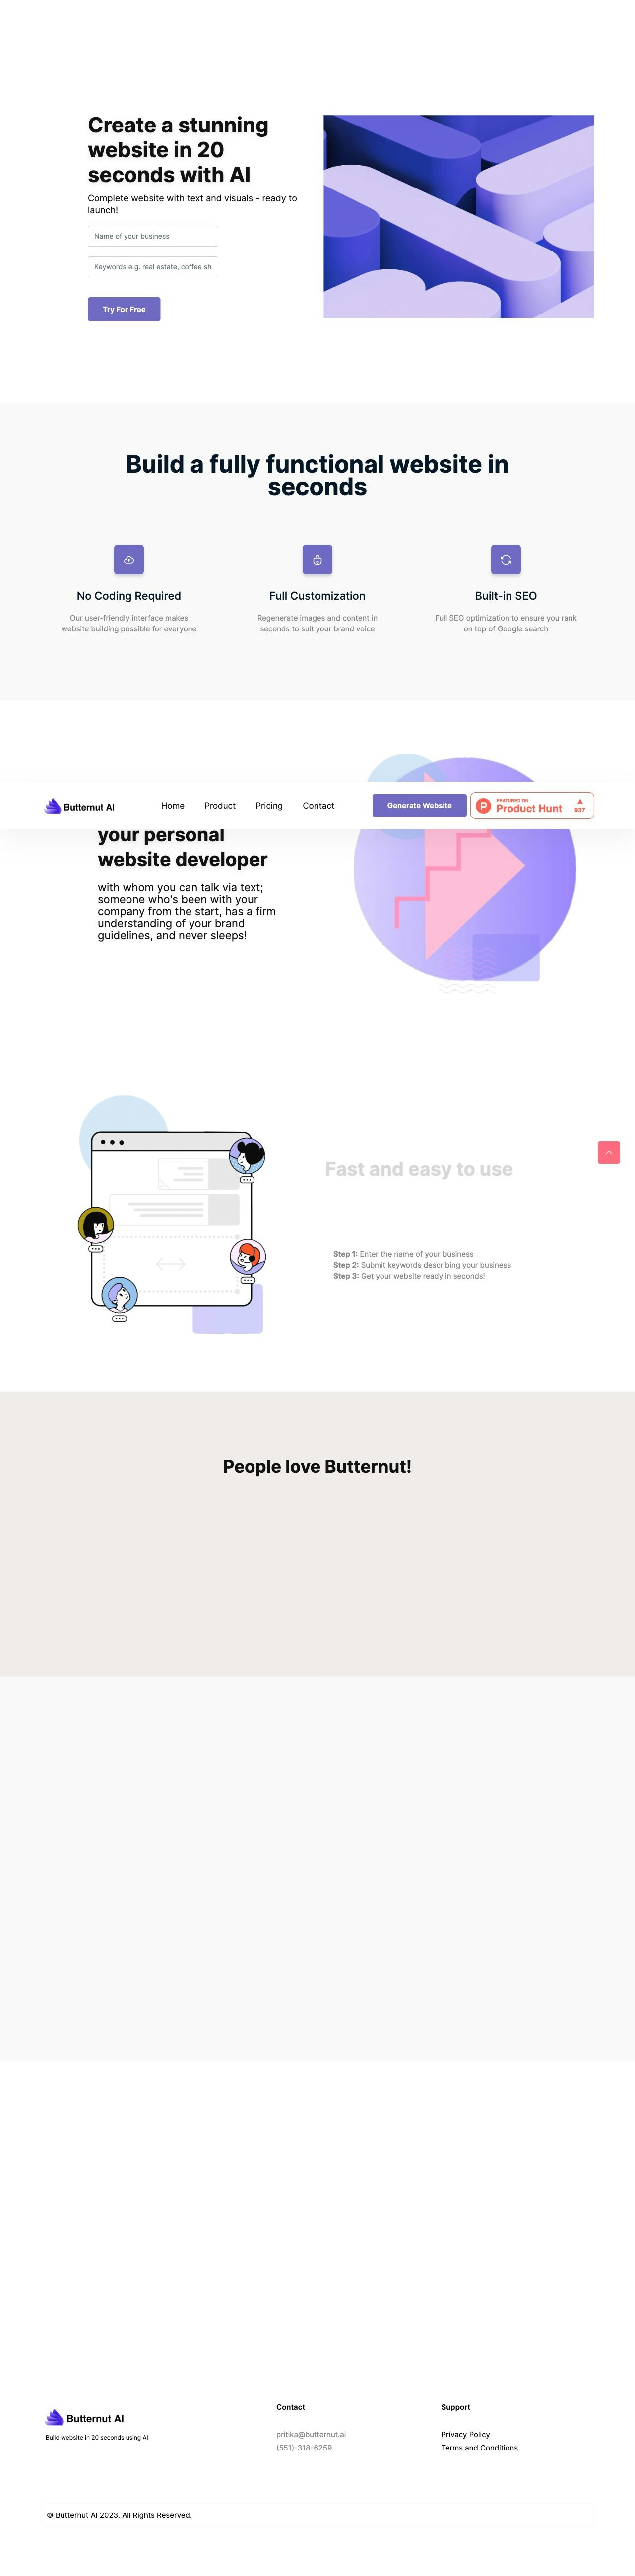 Butternut AI landing page design